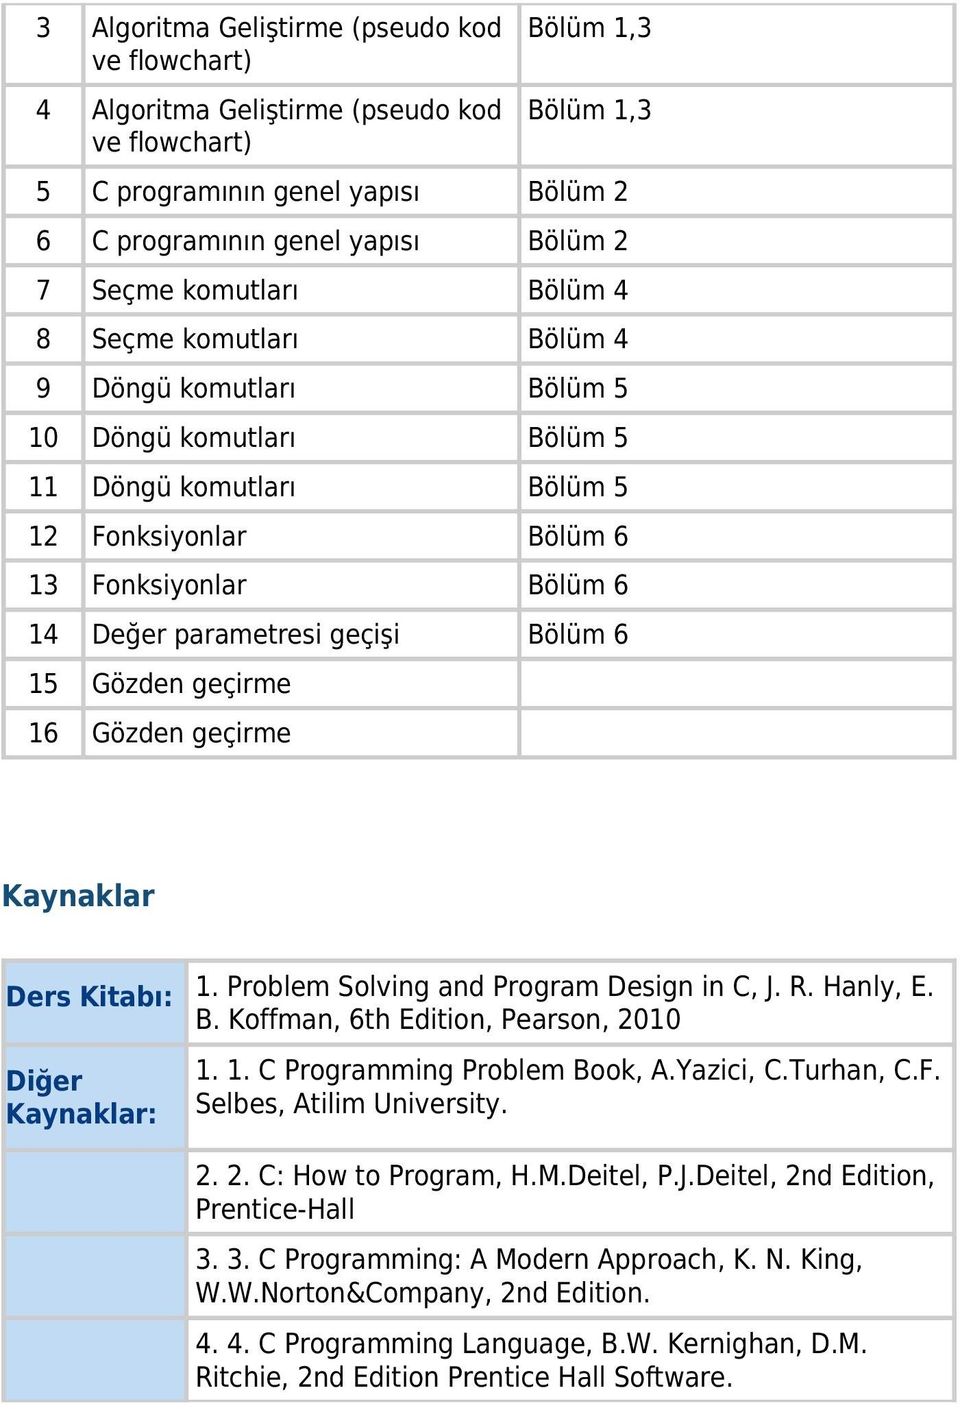 Bölüm 6 15 Gözden geçirme 16 Gözden geçirme Kaynaklar Ders Kitabı: 1. Problem Solving and Program Design in C, J. R. Hanly, E. B. Koffman, 6th Edition, Pearson, 2010 Diğer Kaynaklar: 1. 1. C Programming Problem Book, A.